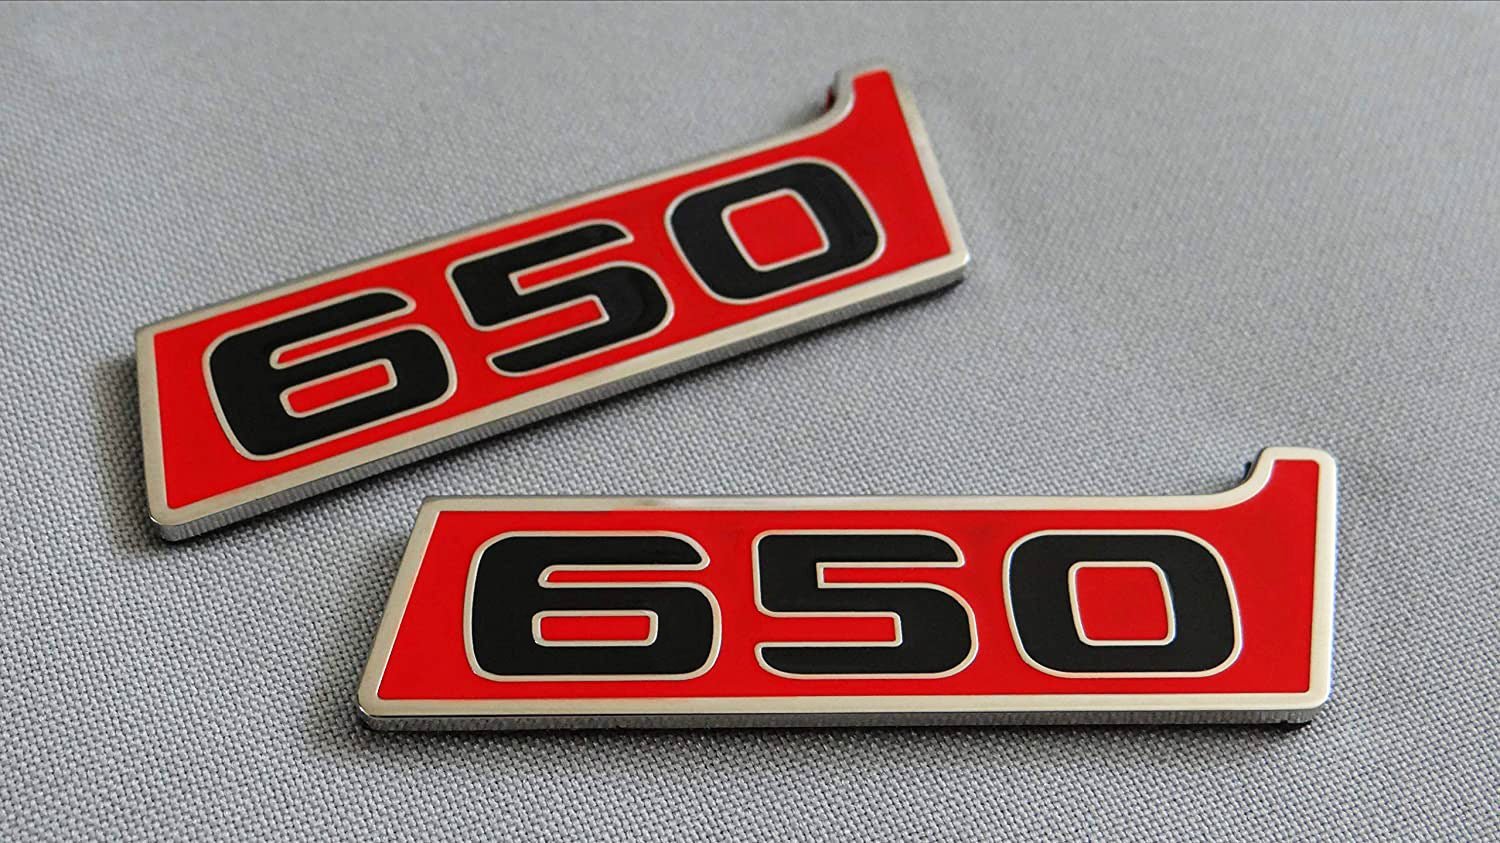 Metal Brabus 650 fenders emblem logo badges for Mercedes-Benz W463 W463A G-Class